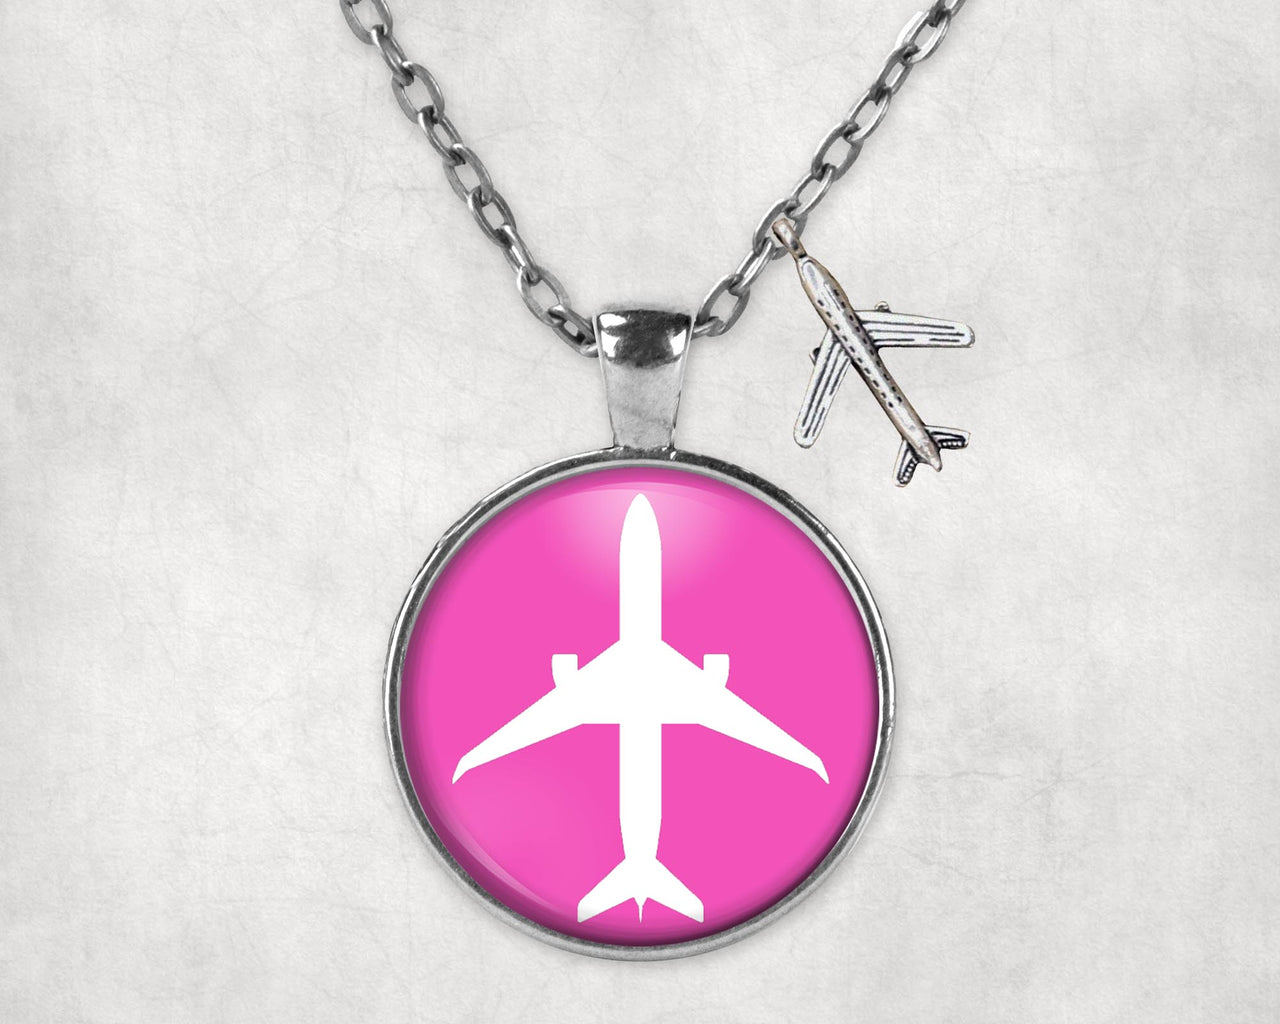 Airplane & Circle Designed Necklaces